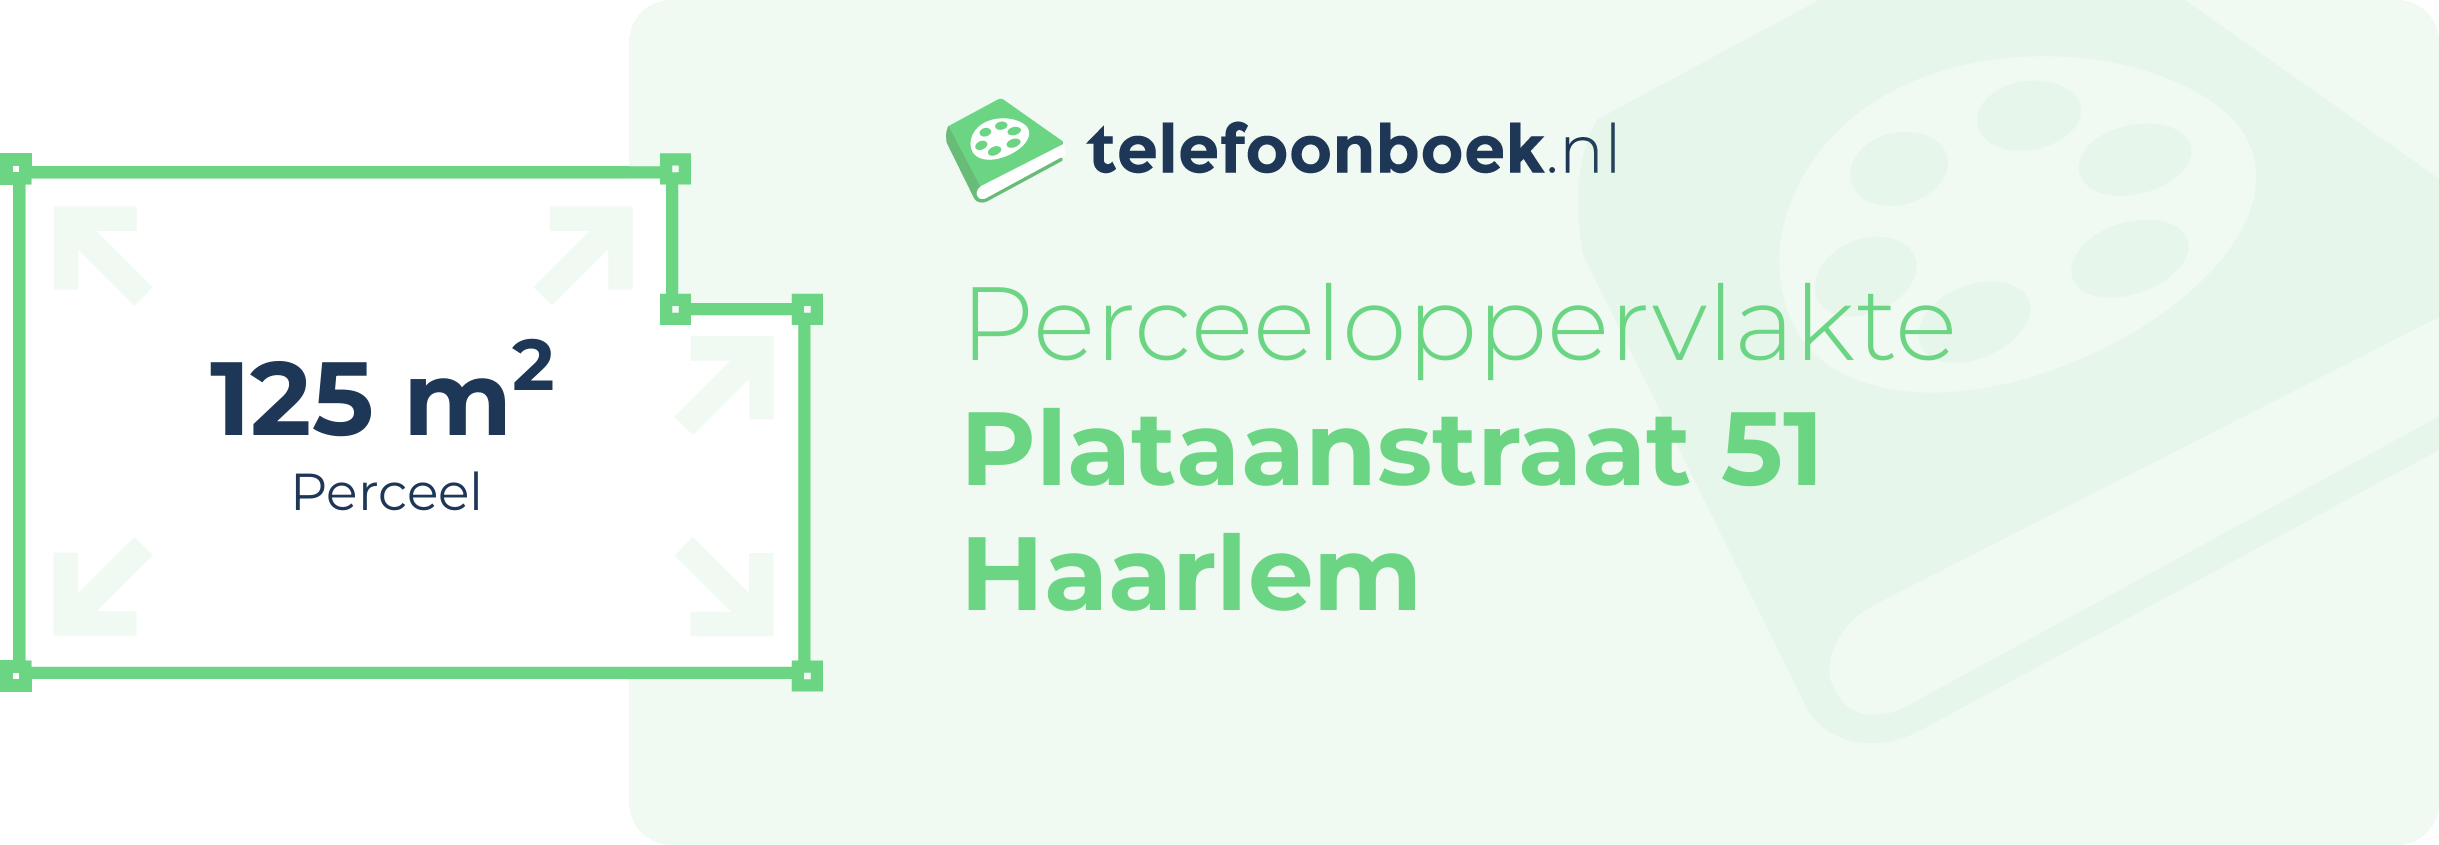 Perceeloppervlakte Plataanstraat 51 Haarlem